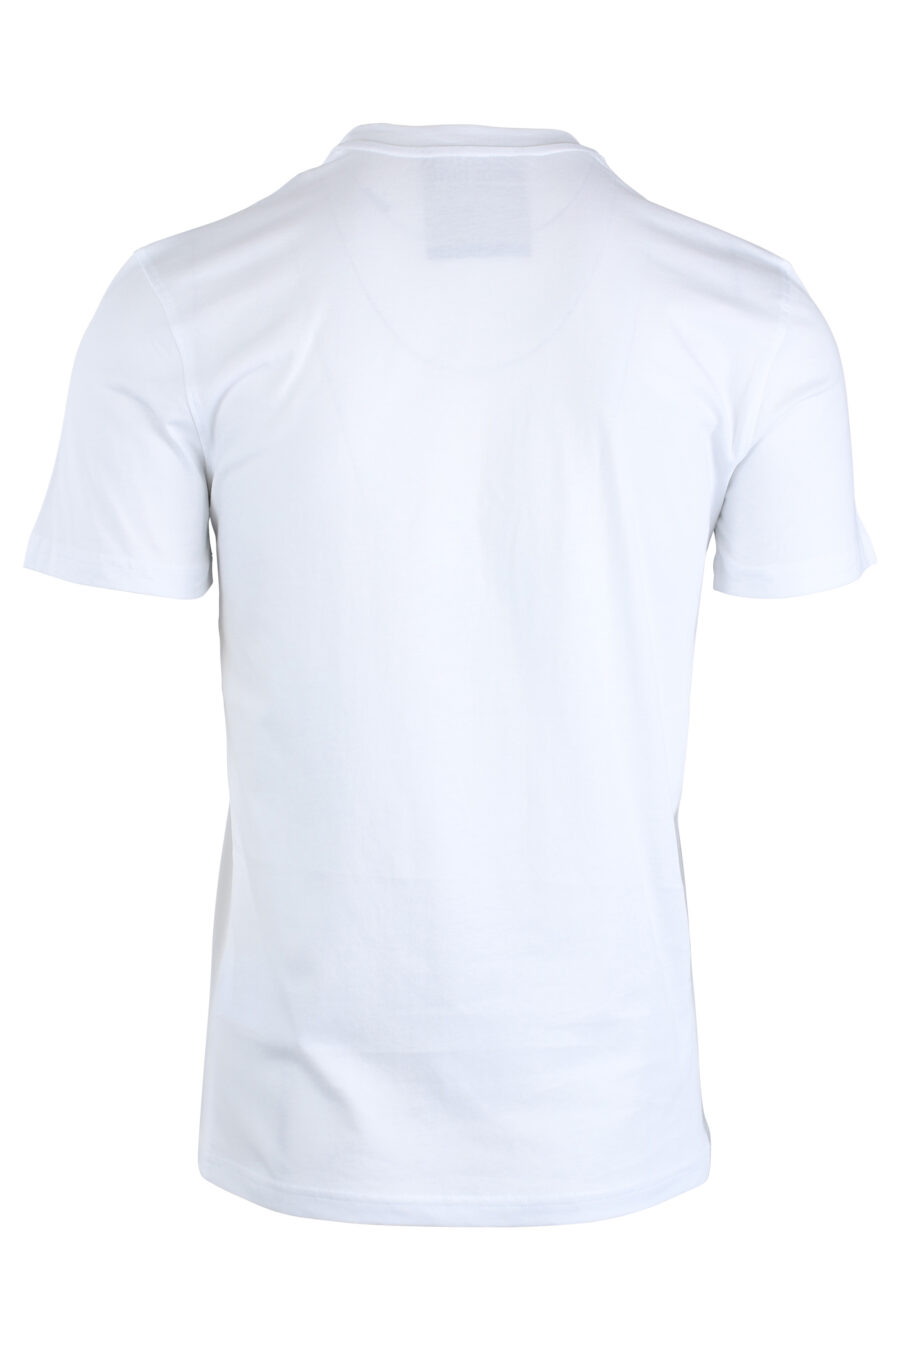 Camiseta blanca con logo en franja negro - IMG 1687